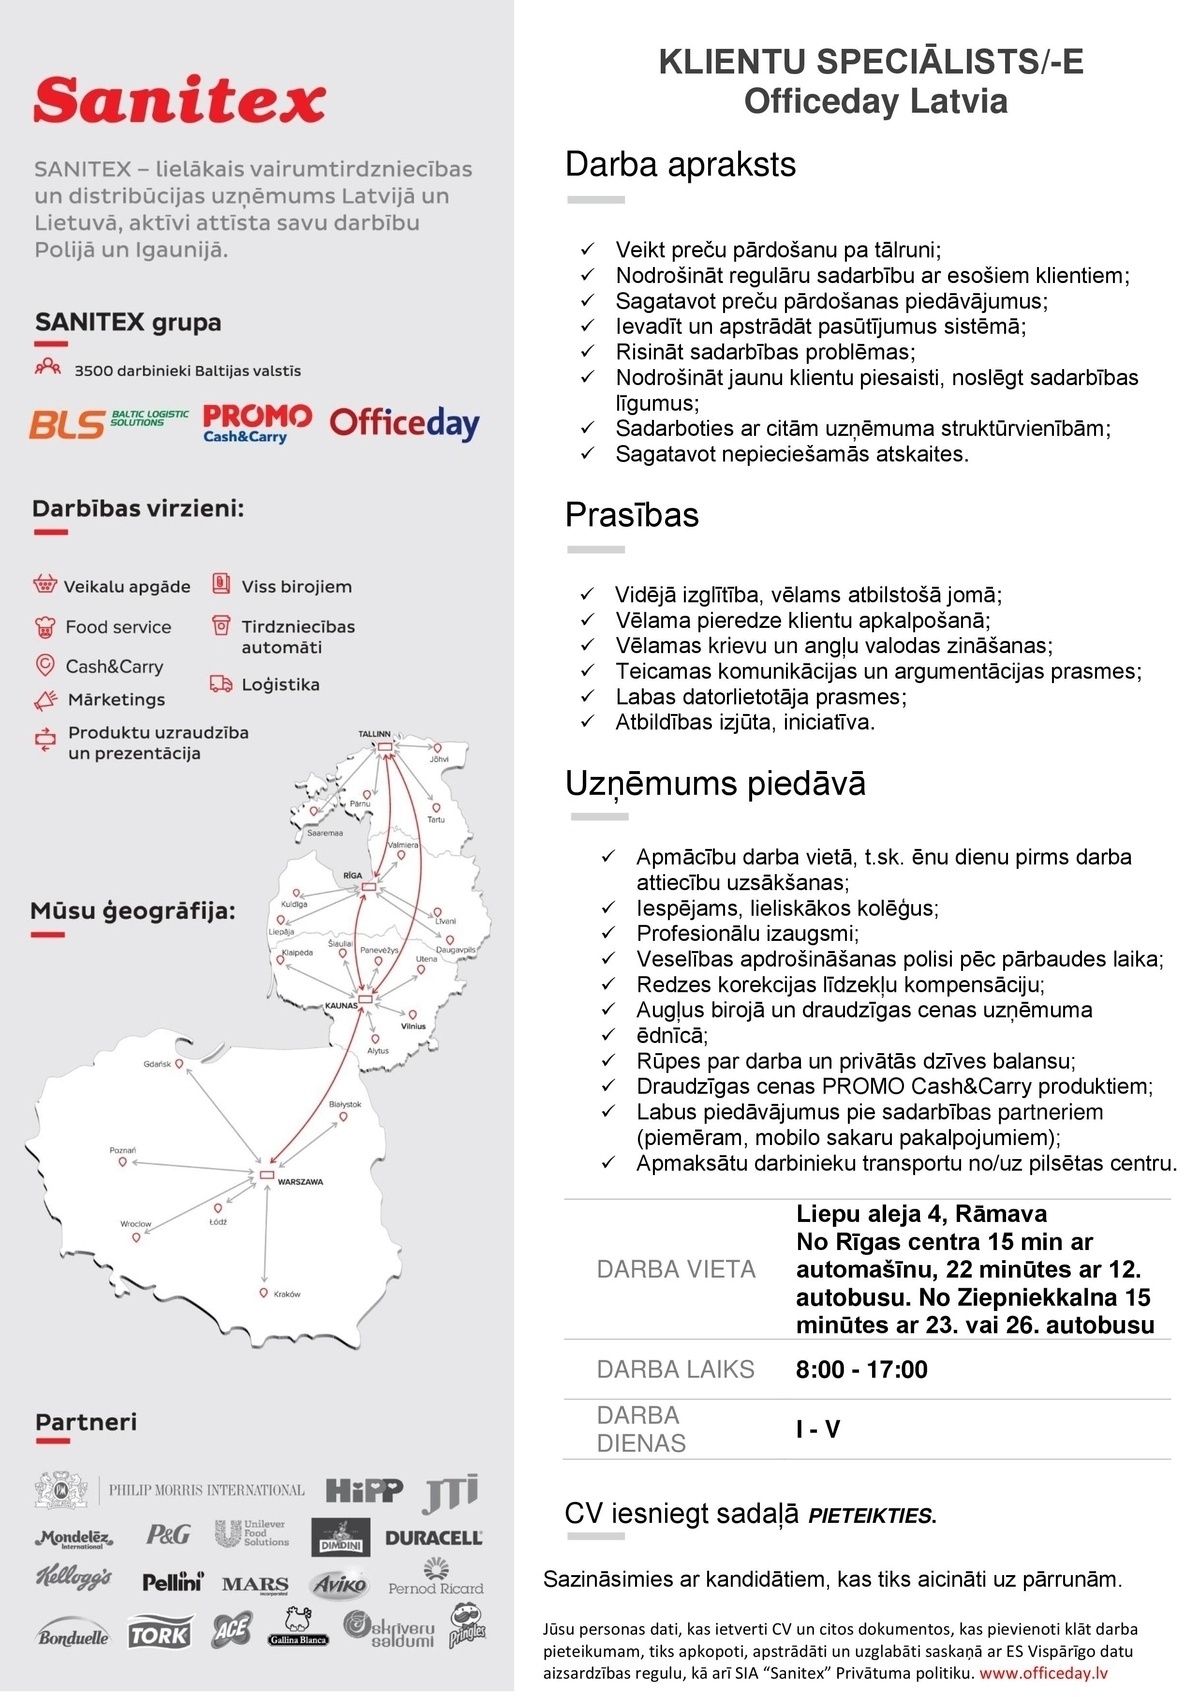 Sanitex, SIA "Officeday Latvia" Klientu speciālists/-e